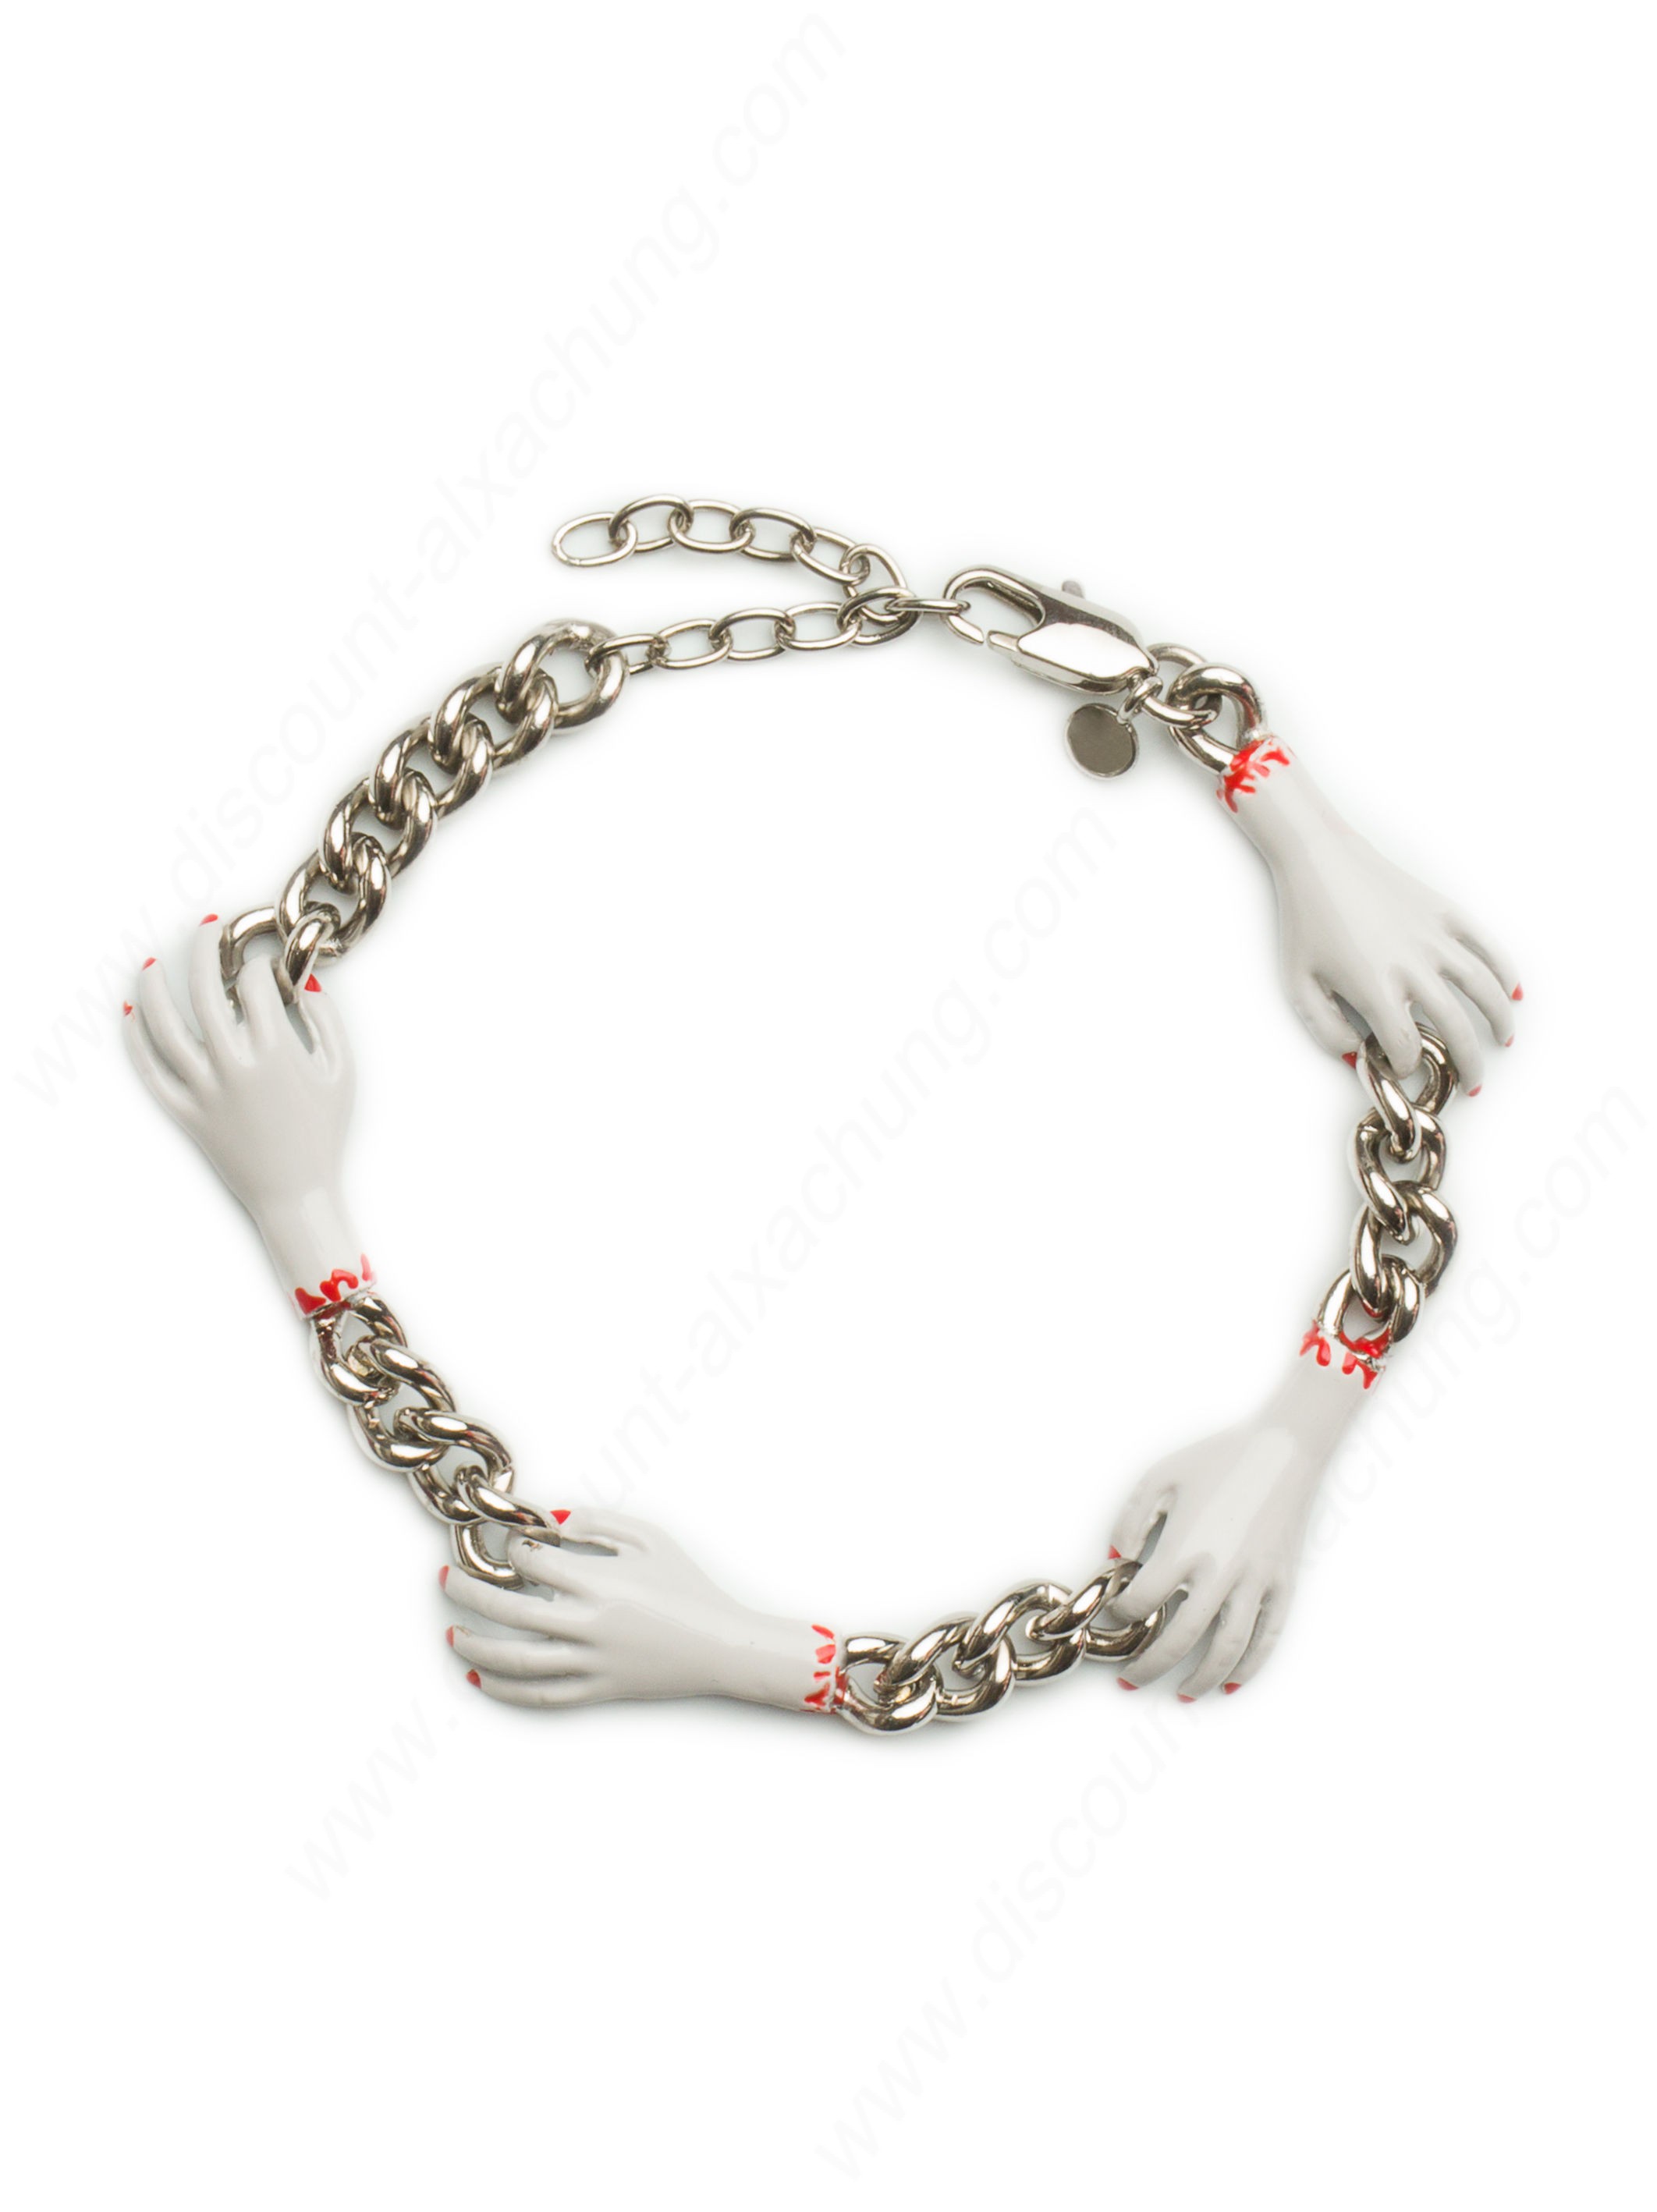 Alexachung Severed Hand Bracelet - Alexachung Severed Hand Bracelet